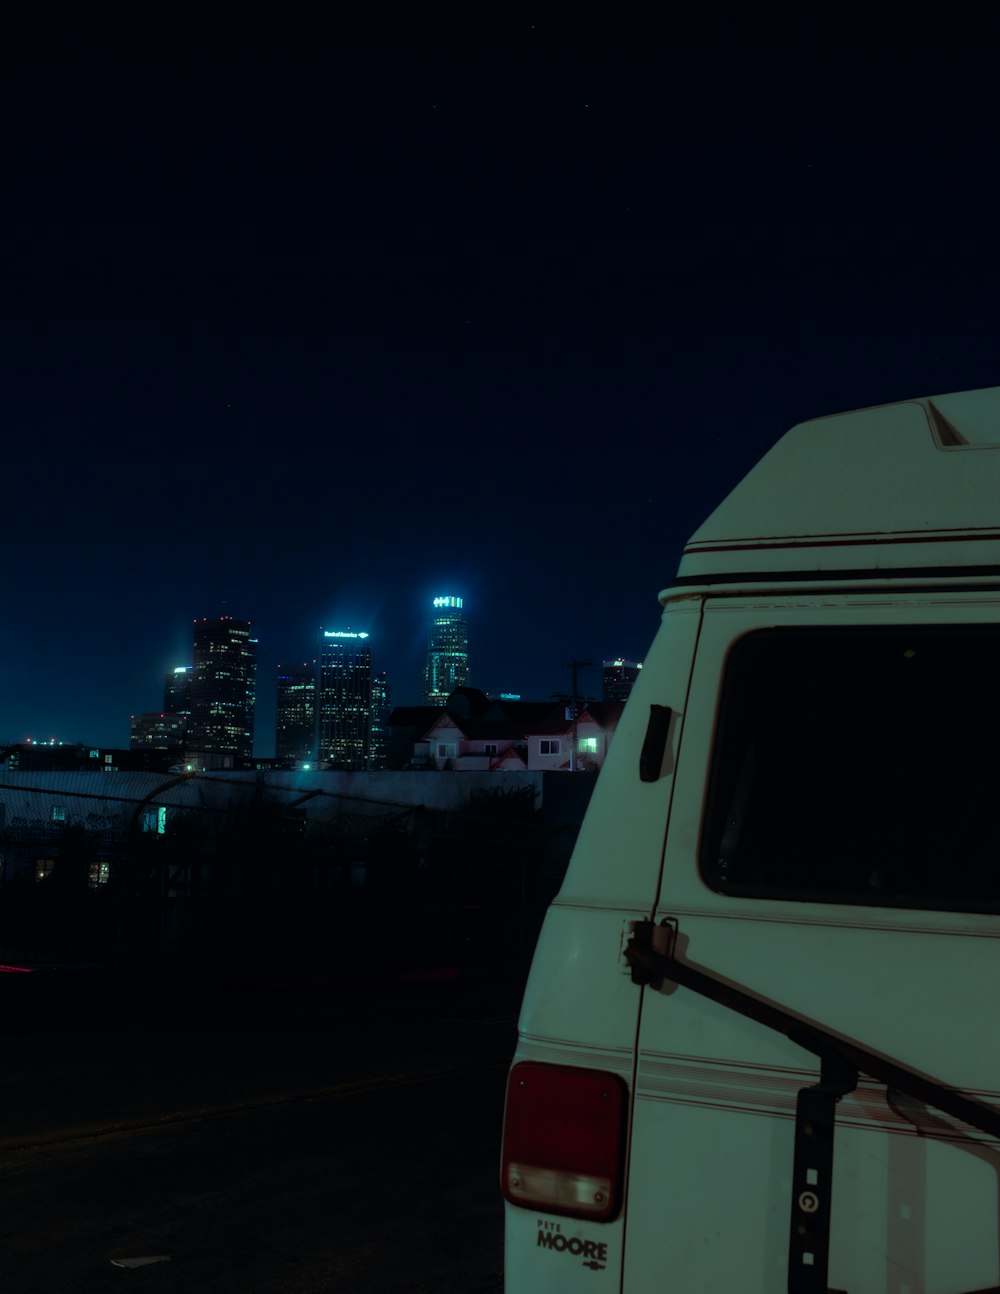 White van on road during night time photo – Free Blue Image on Unsplash